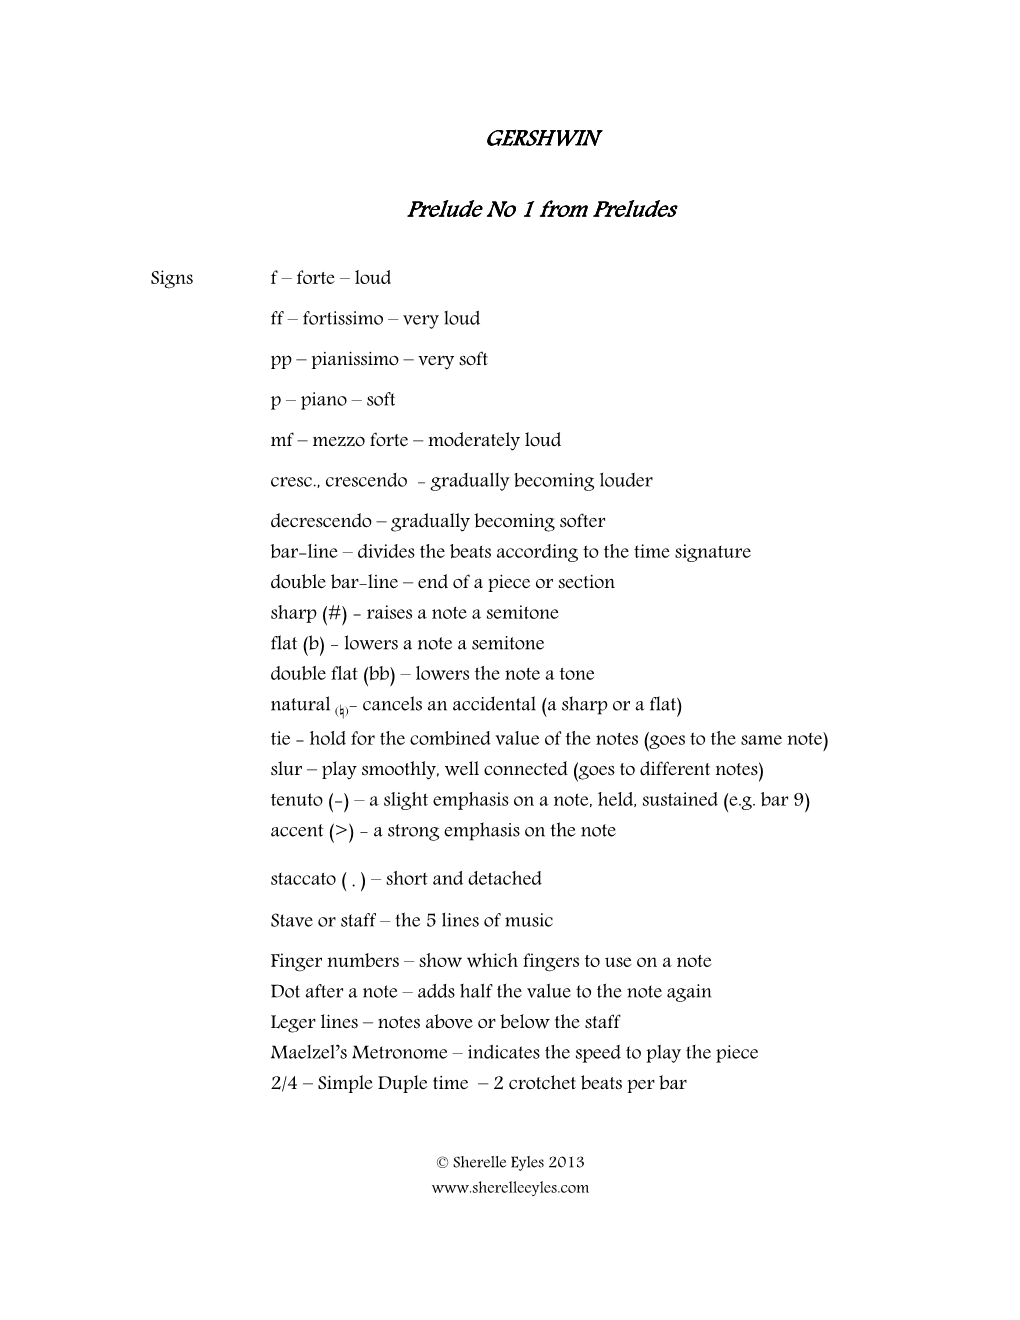 Gershwin-Prelude-No-1.Pdf